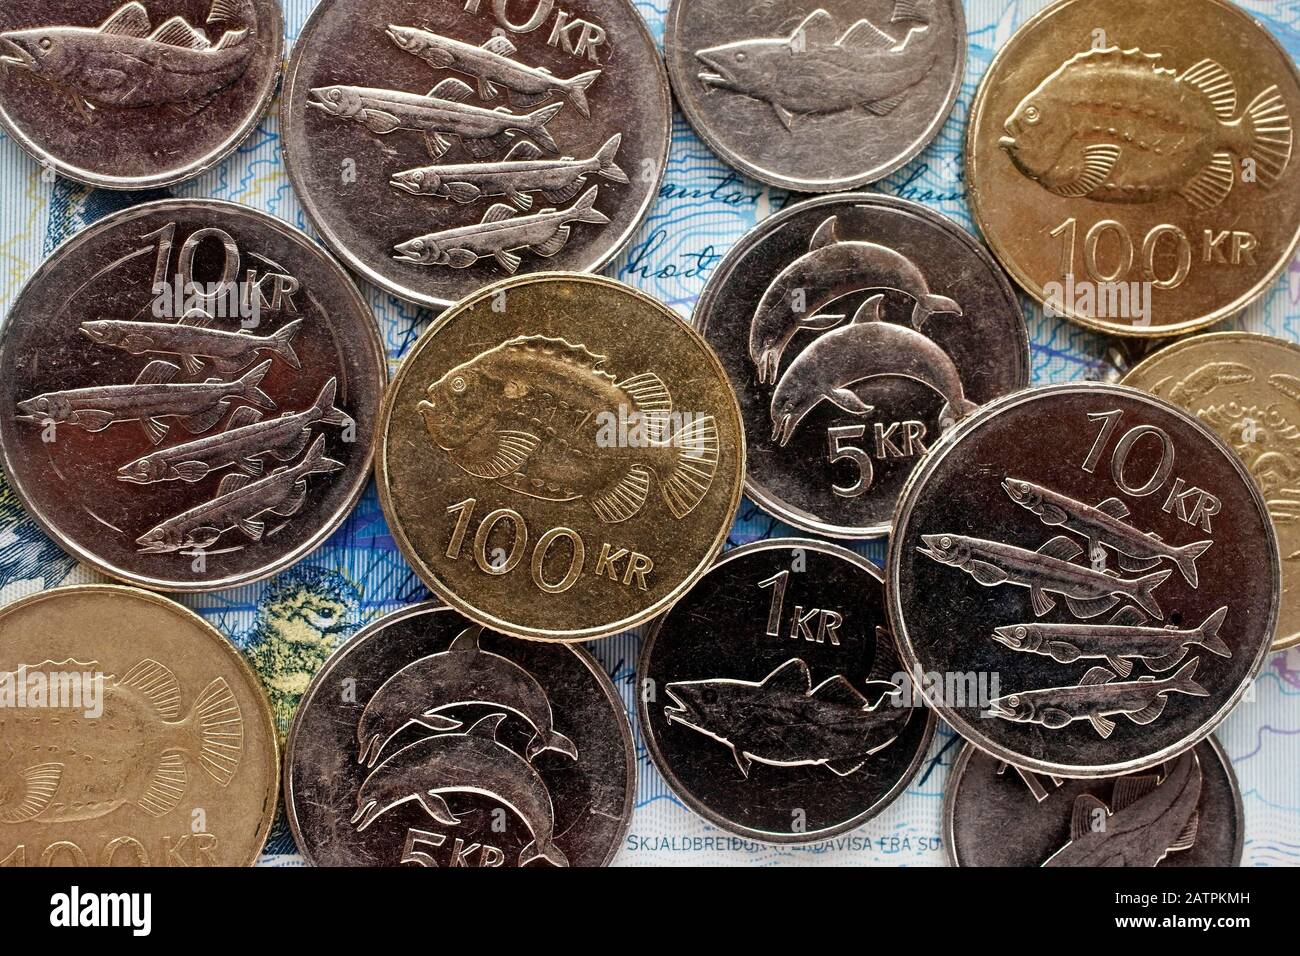 Corona islandese, valuta le monete con pesci e animali marini, Islanda Foto  stock - Alamy